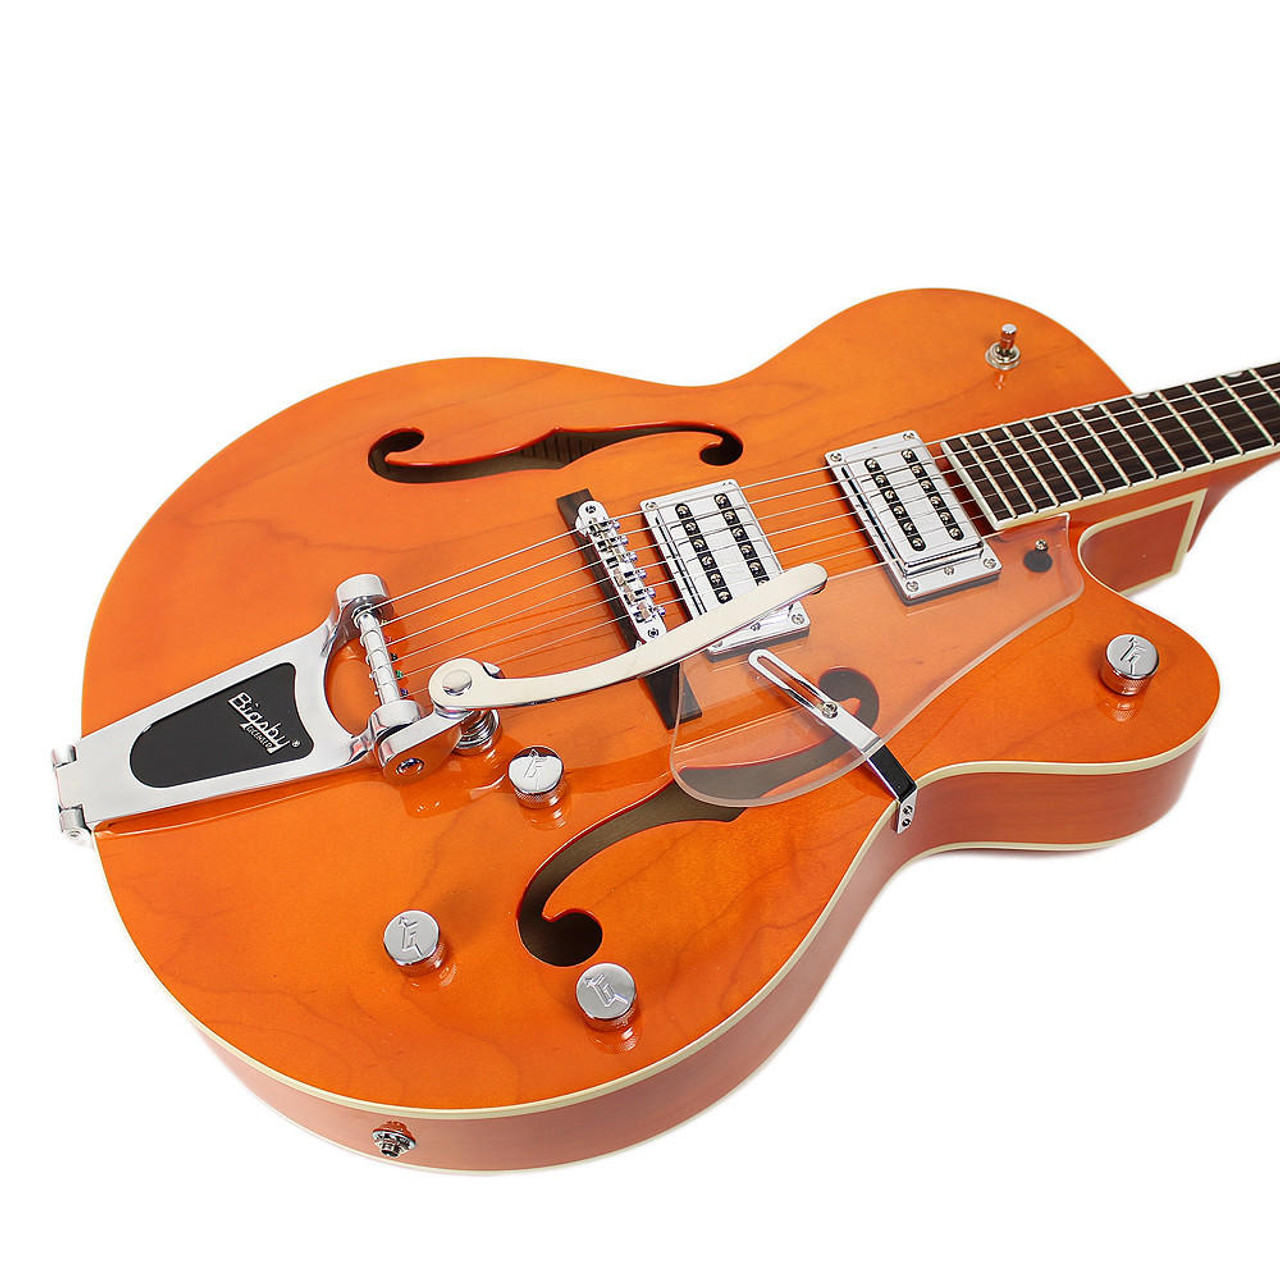 2007 Gretsch G5120 Electromatic Hollow Body Electric Guitar Translucent  Orange